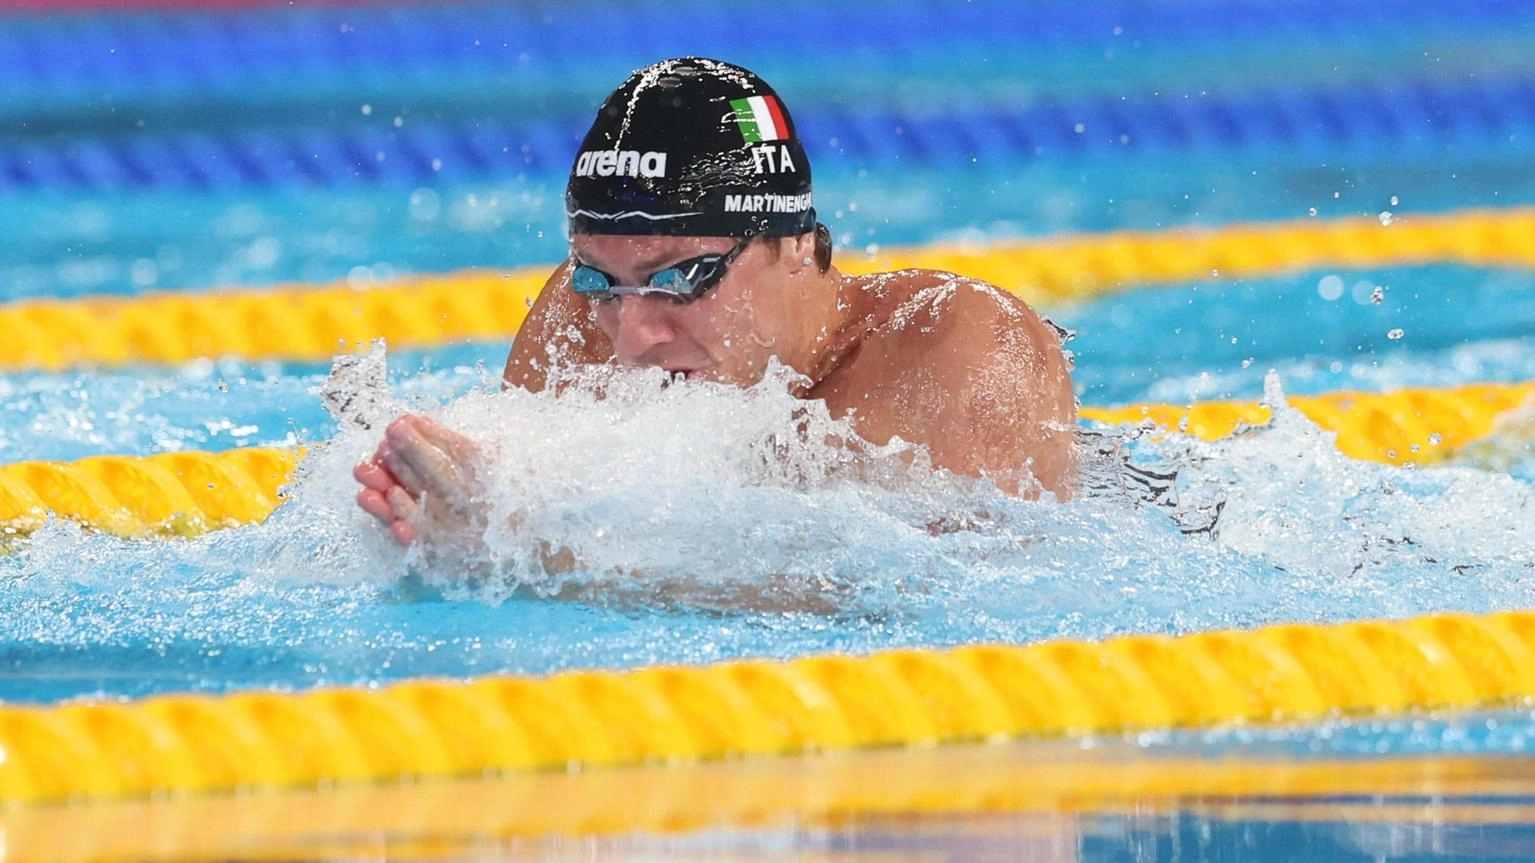 Mondiali nuoto: Martinenghi argento nei 50 rana